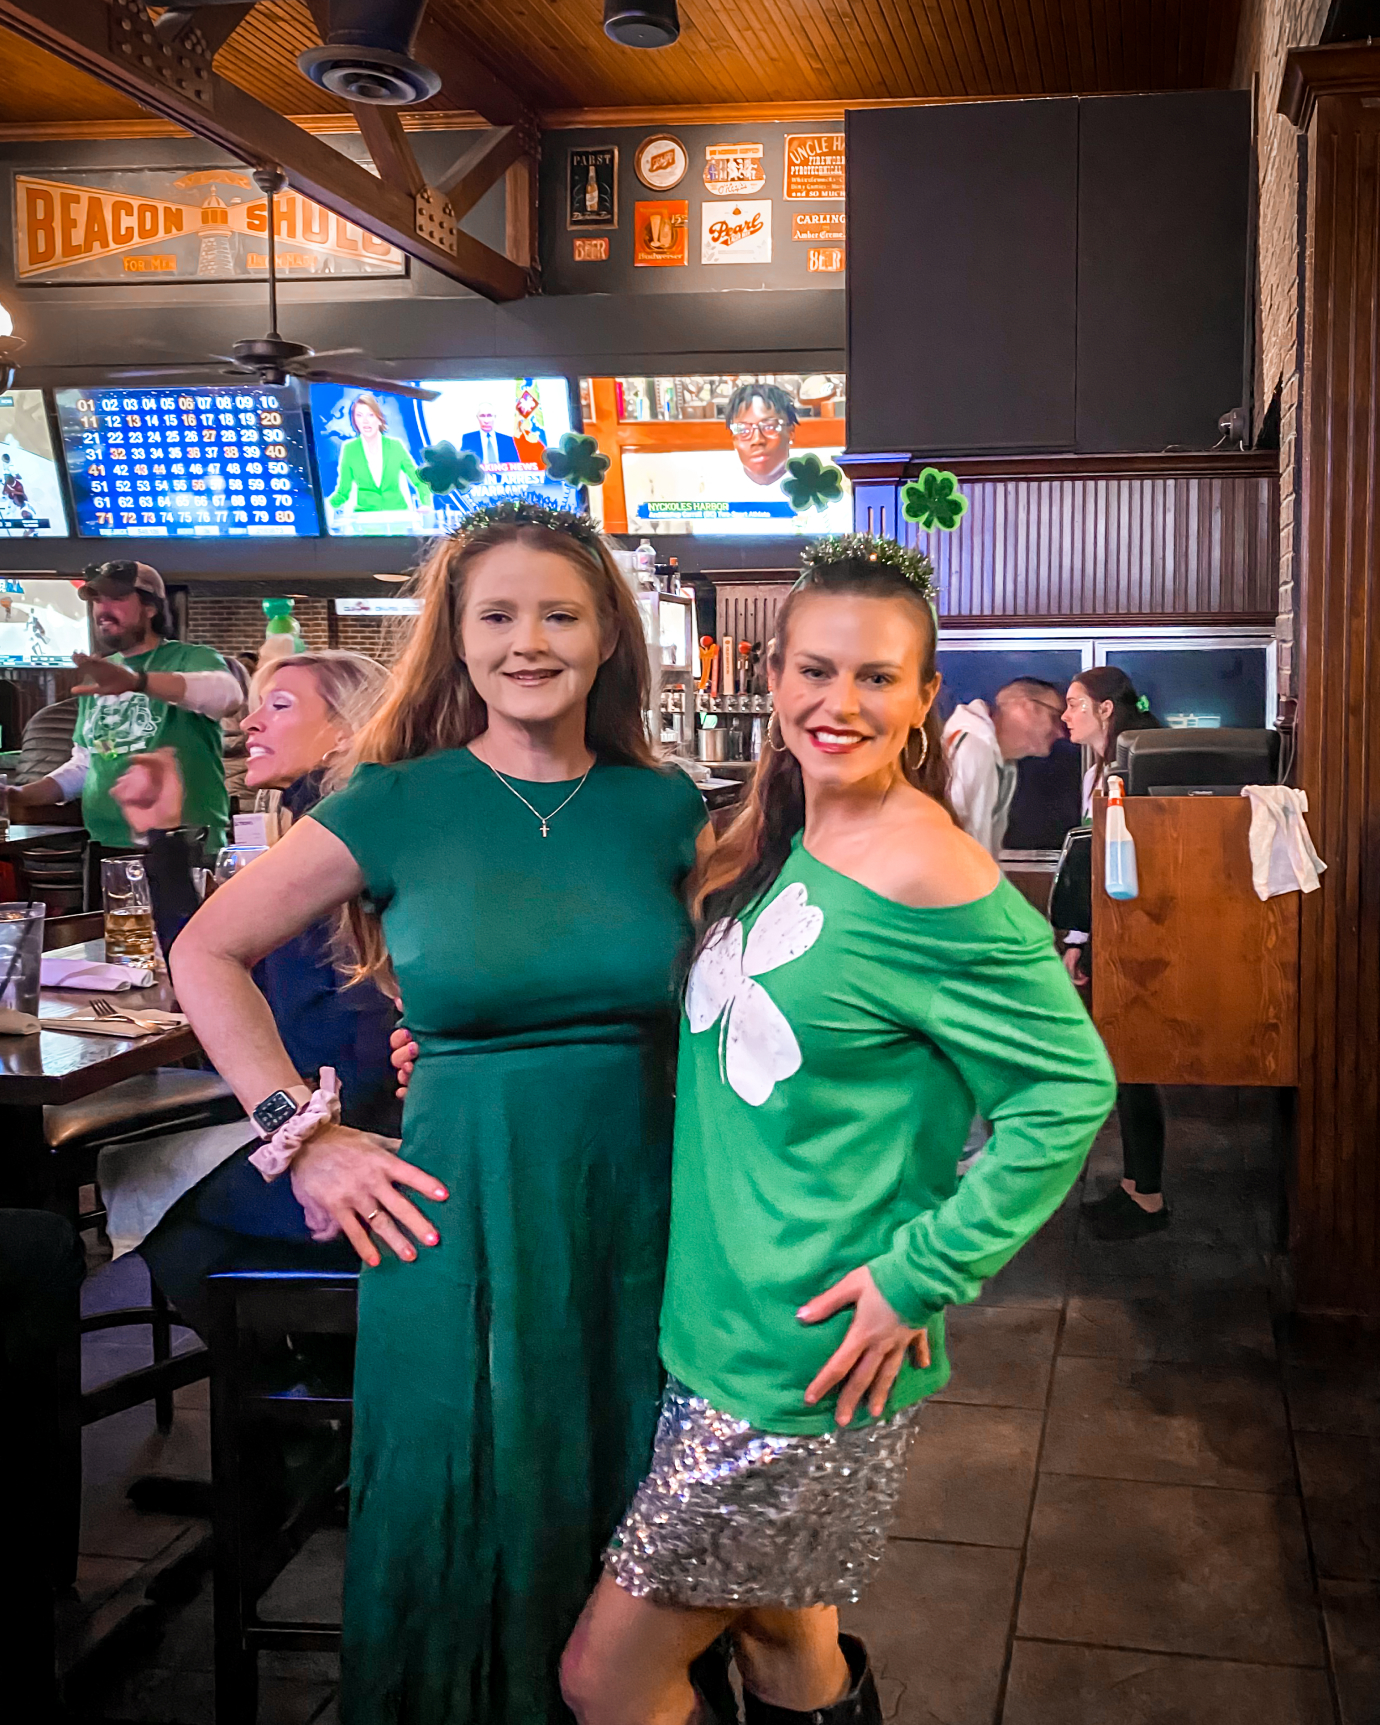 Casey Kolp with a friend celebrating St. Patrick's Day in a bar.